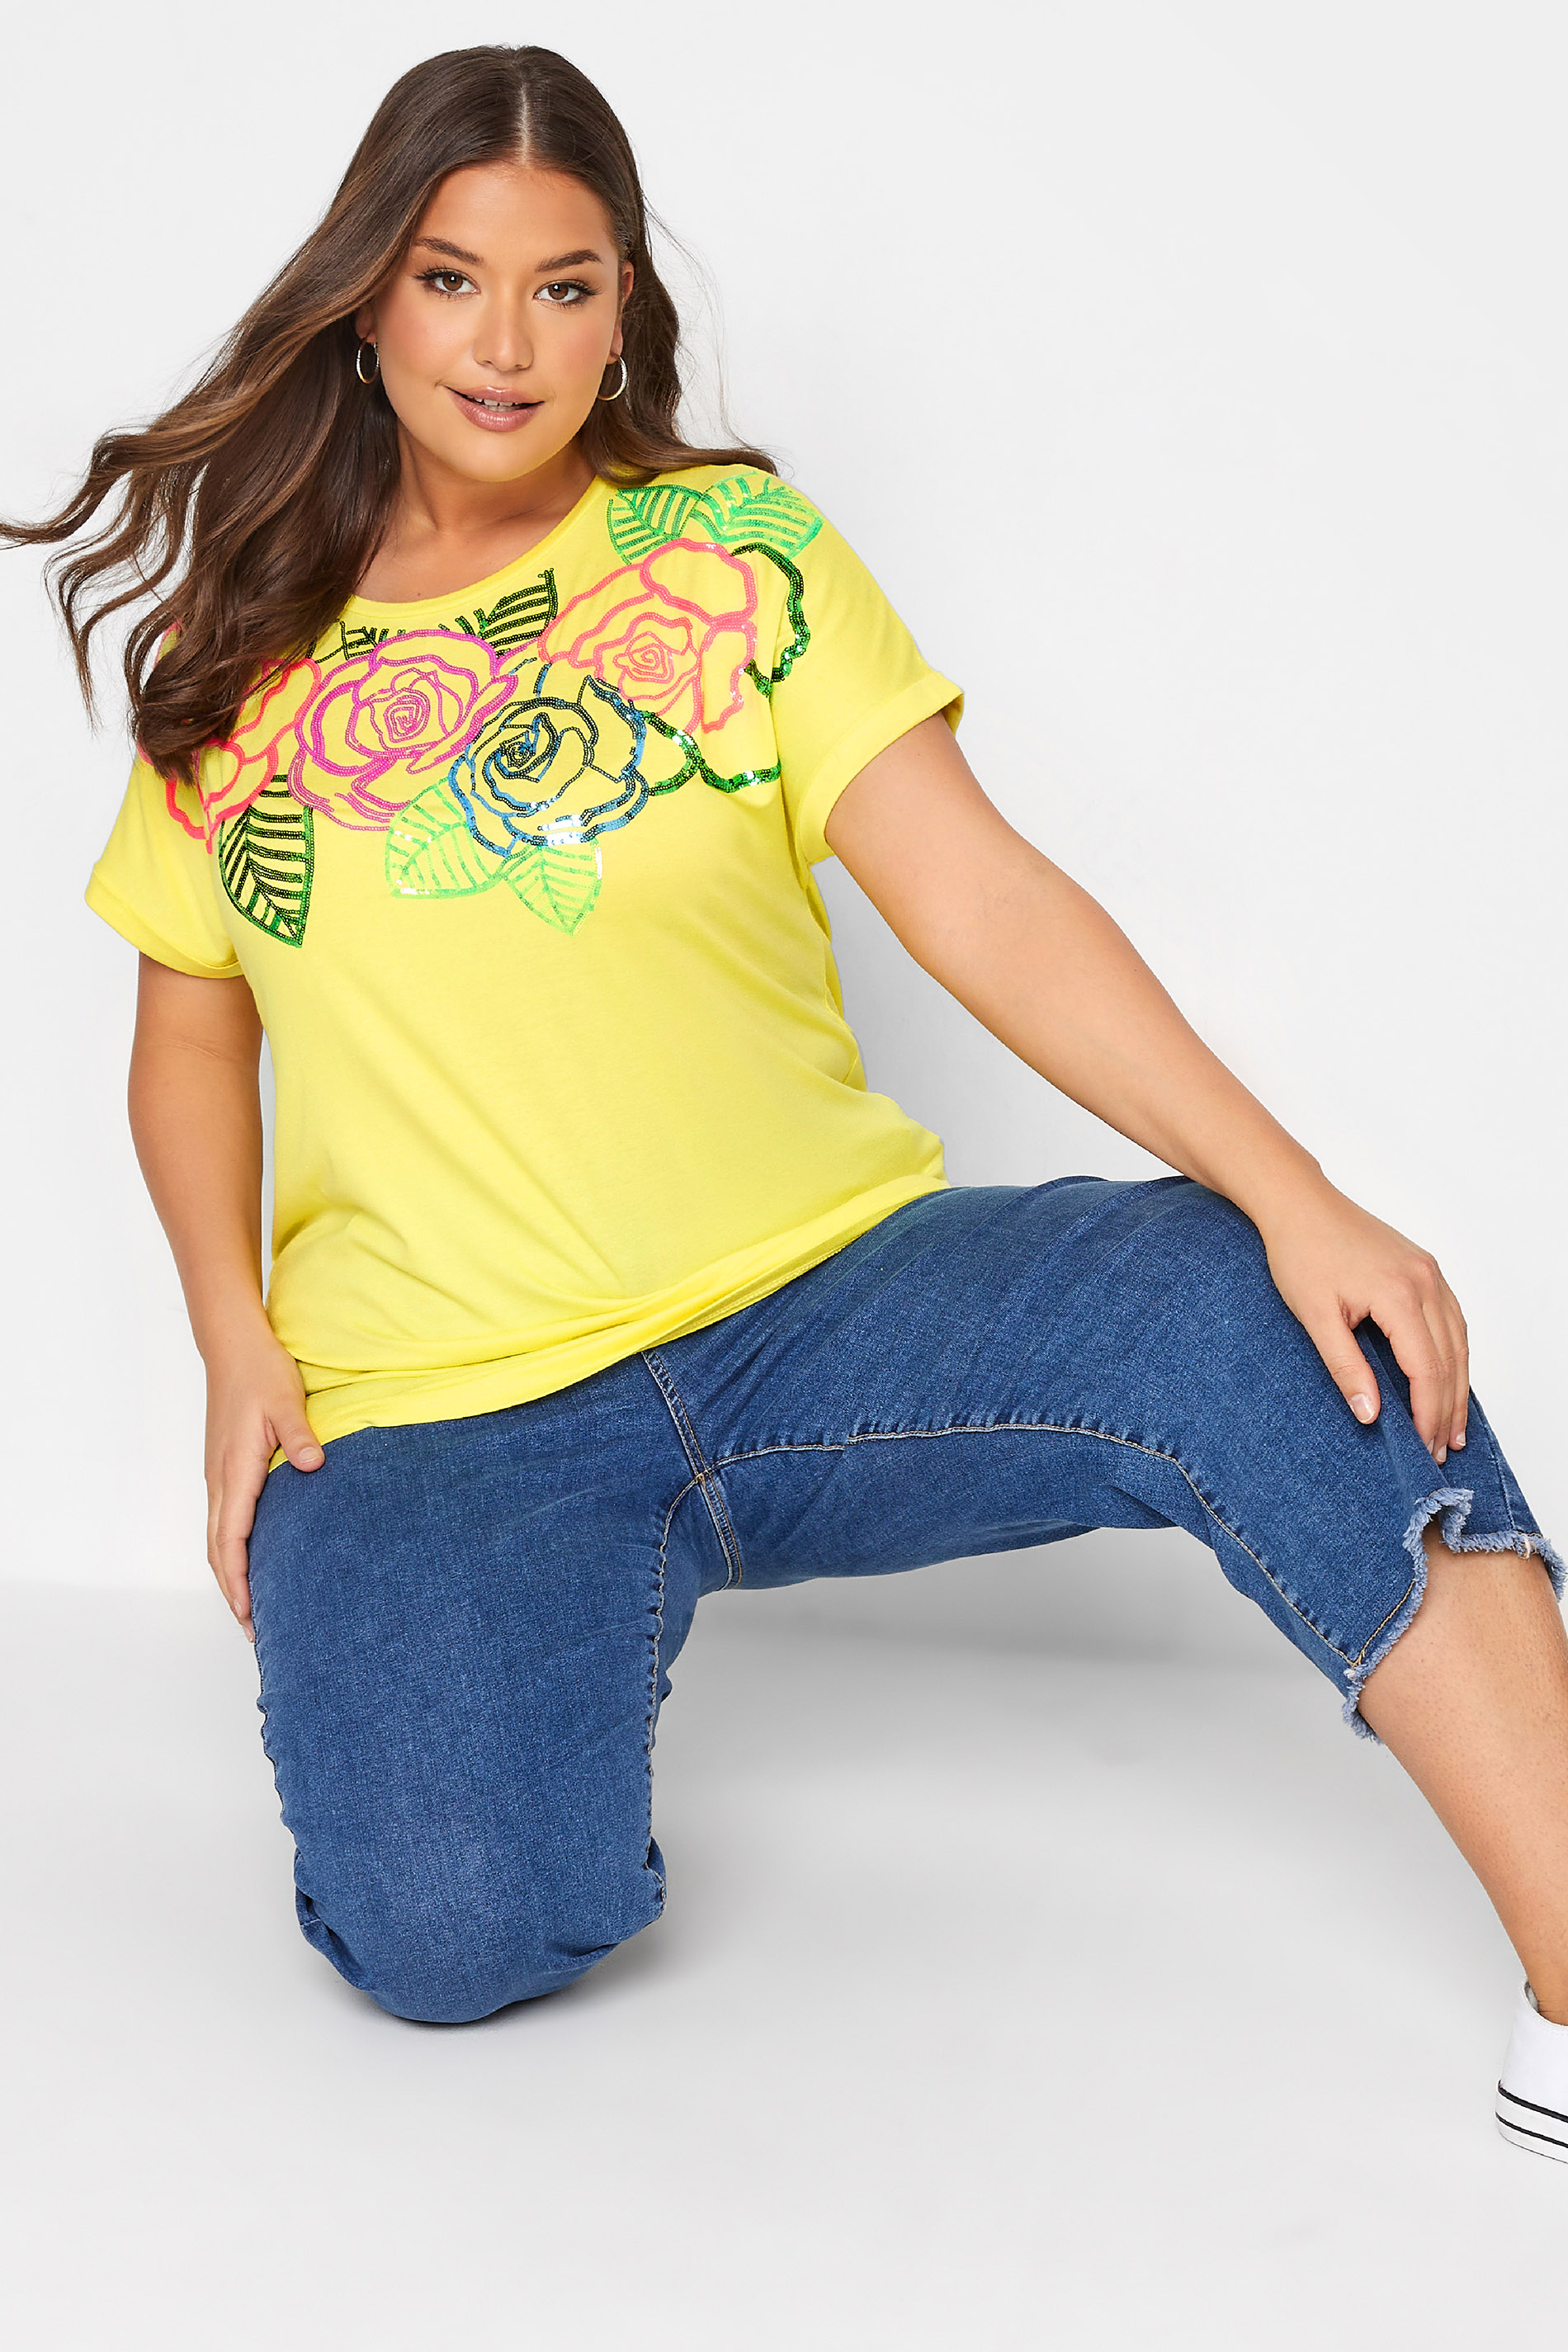 Grande taille  Tops Grande taille  T-Shirts | T-Shirt Jaune Empiècement Floral Sequins - VX66143